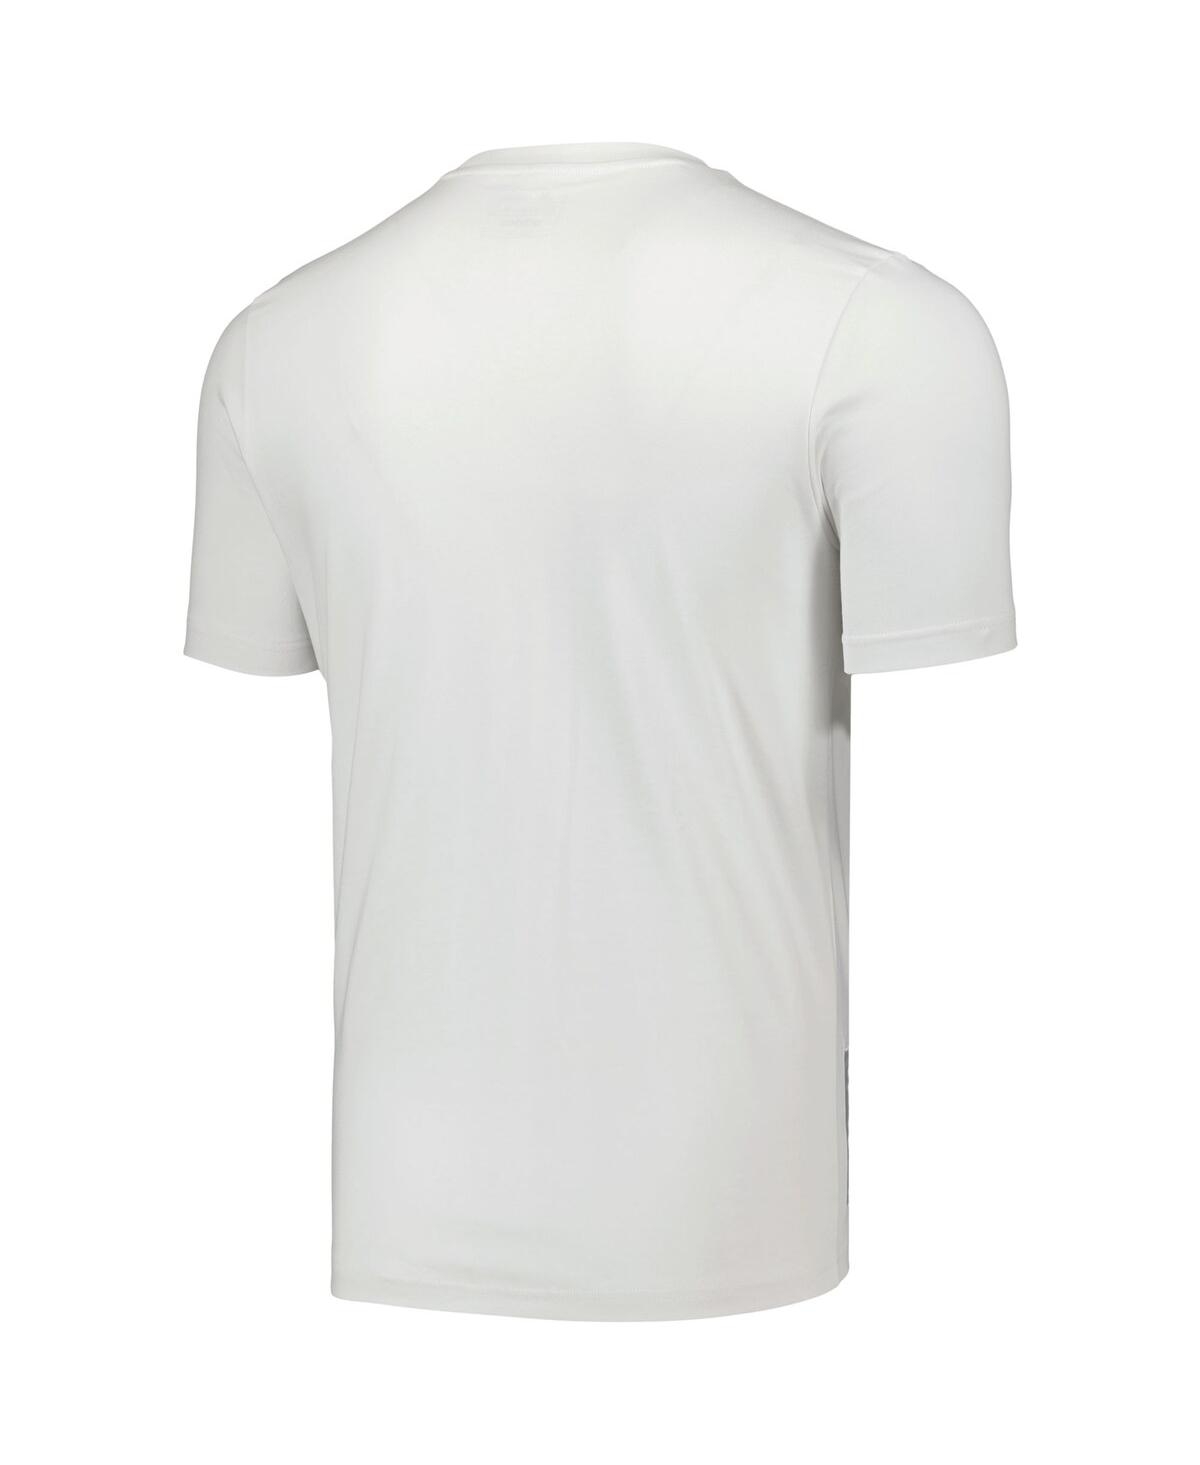 Shop Adidas Originals Men's Adidas White Peter Saville X Manchester United T-shirt